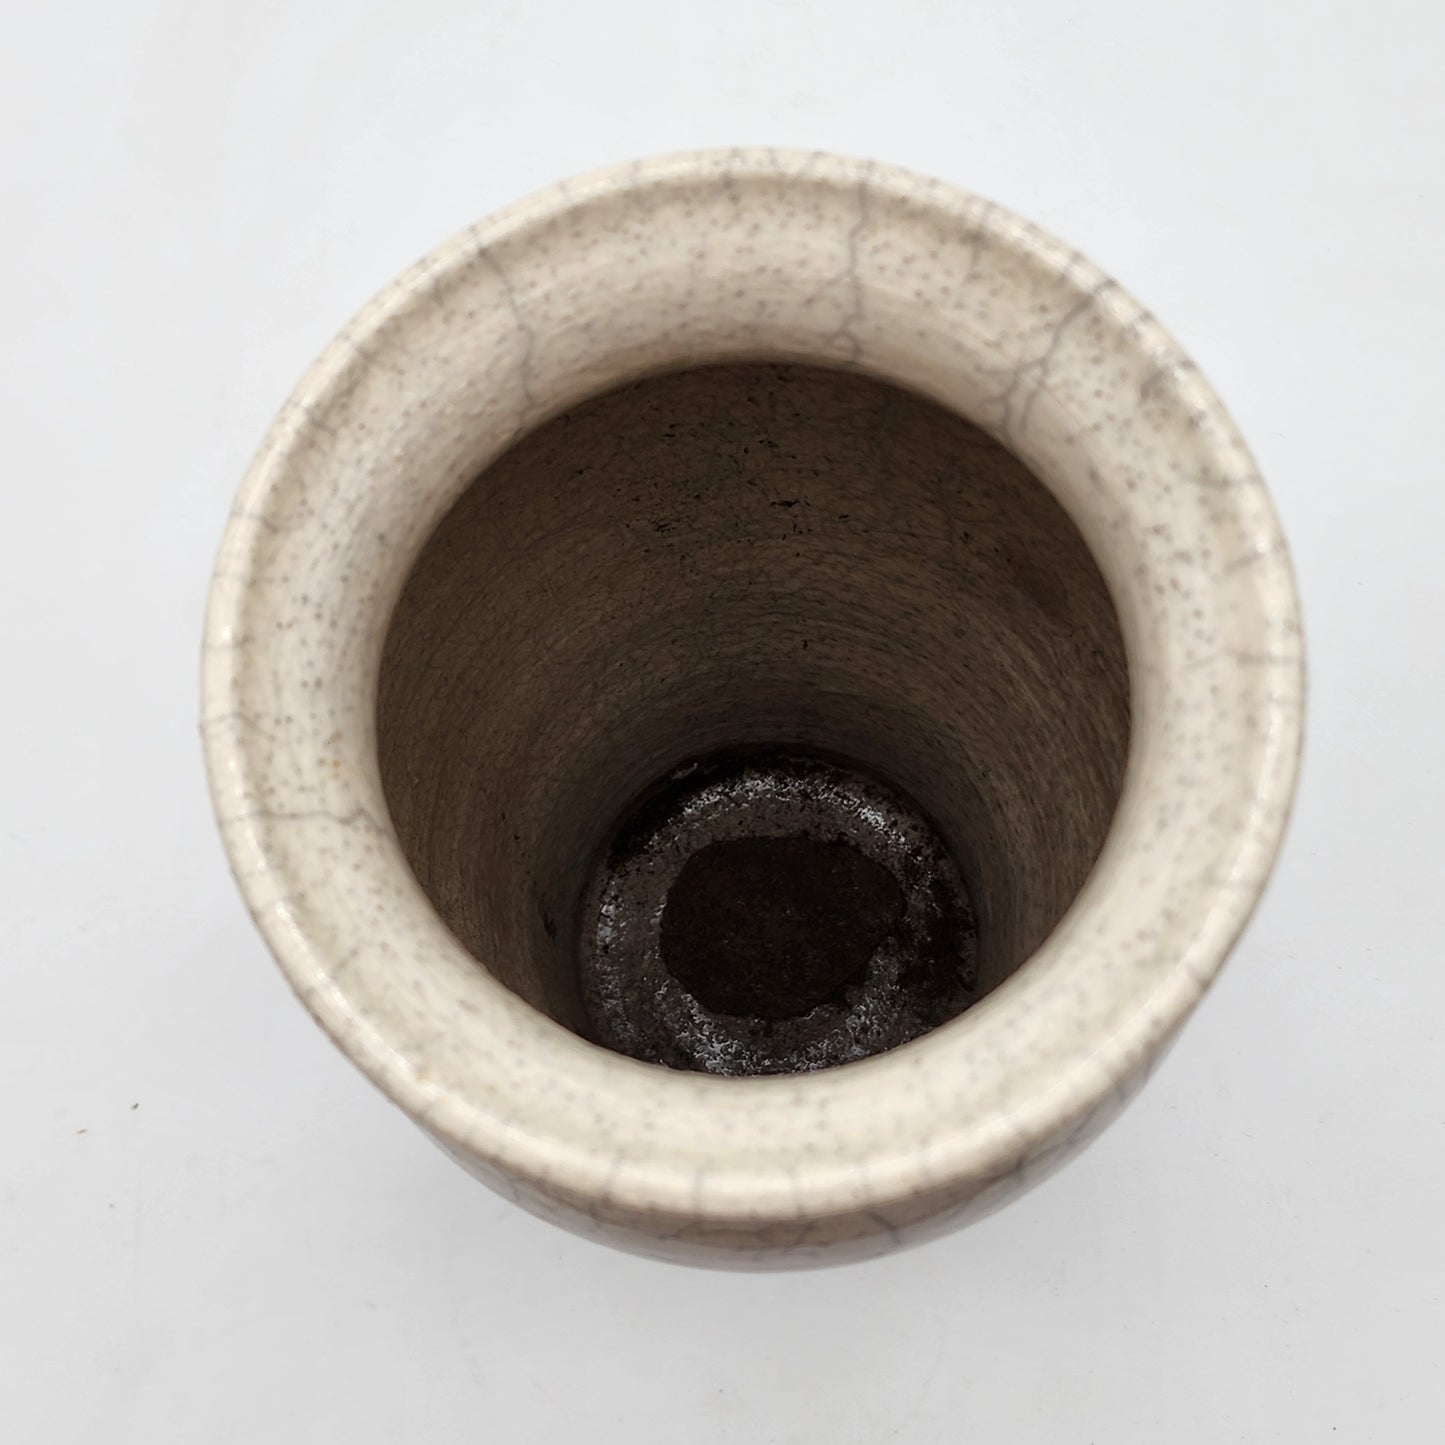 Large Raku Pottery Vase